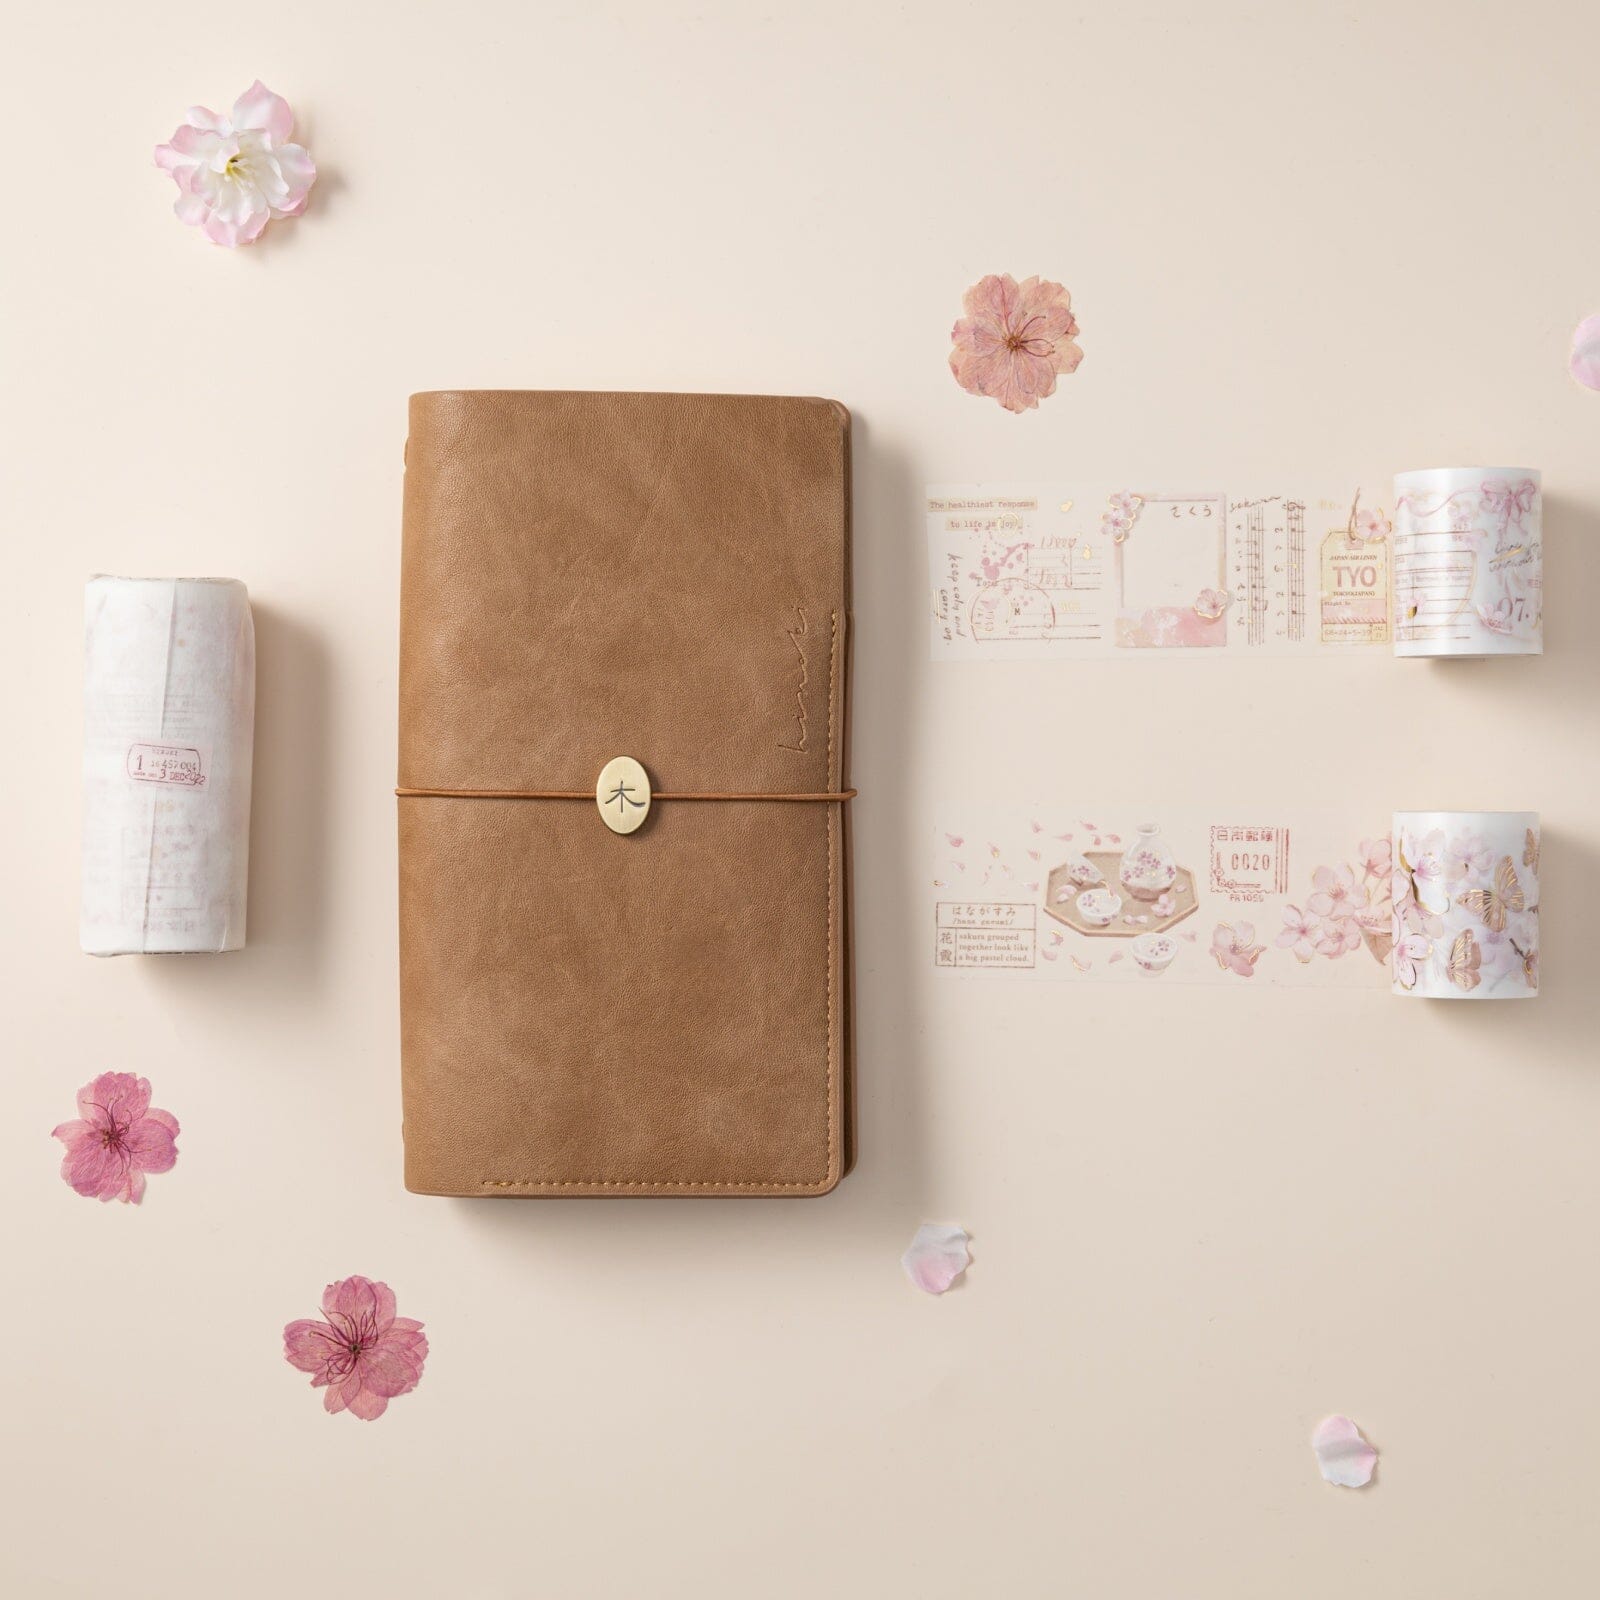 Hinoki Travel Notebook flatlay with Hinoki into the blossom washi tapes